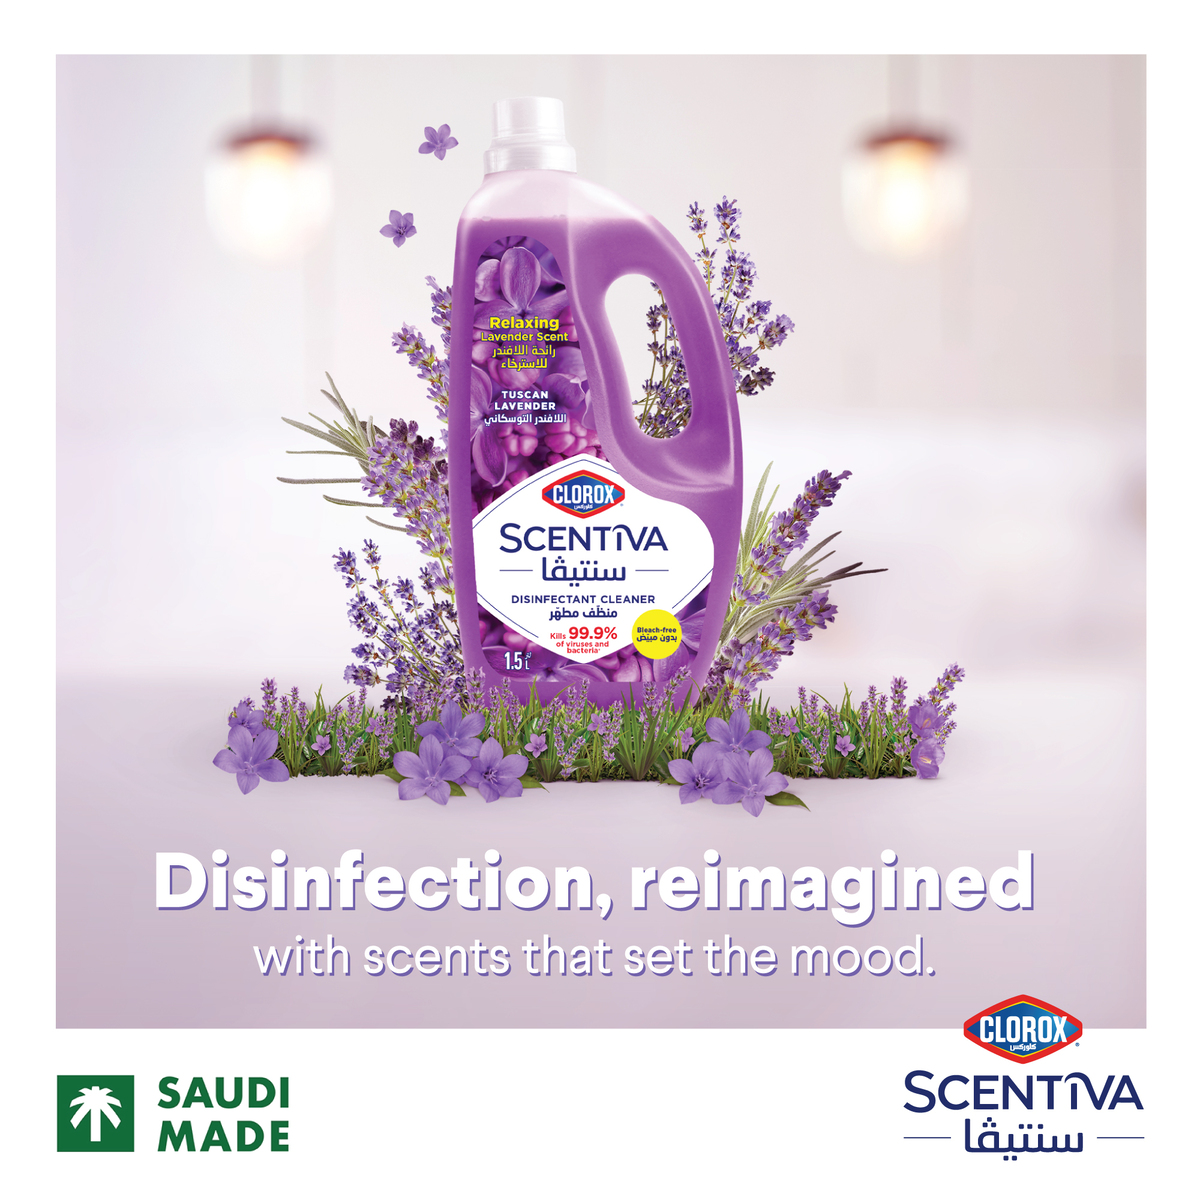 Clorox Scentiva Disinfectant Cleaner Tuscan Lavender 1.5 Litres